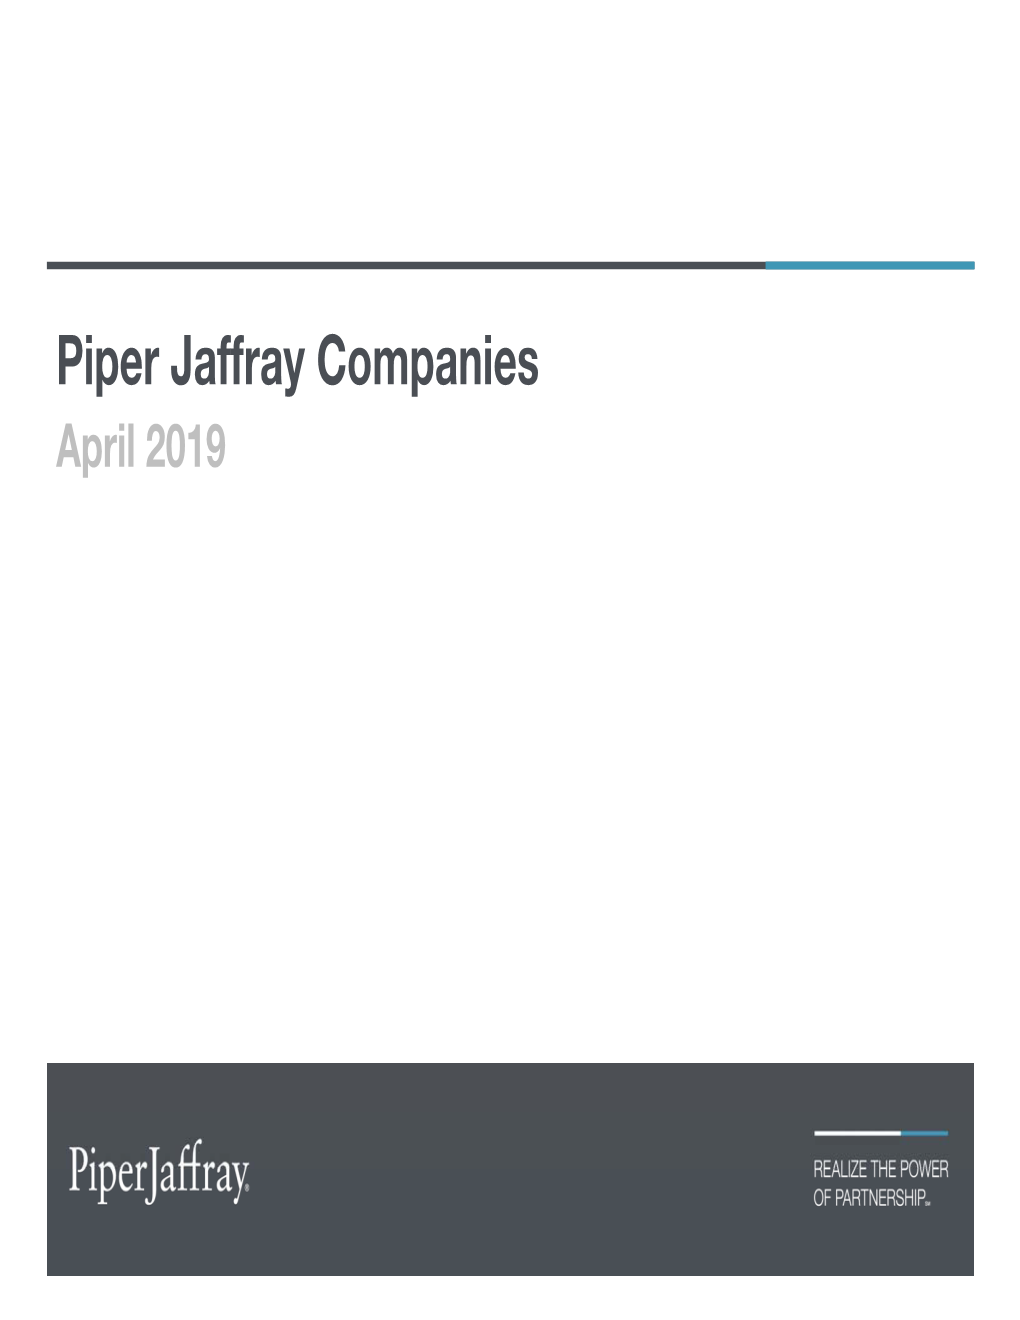 Piper Jaffray Companies April 2019 CAUTION REGARDING FORWARD-LOOKING STATEMENTS